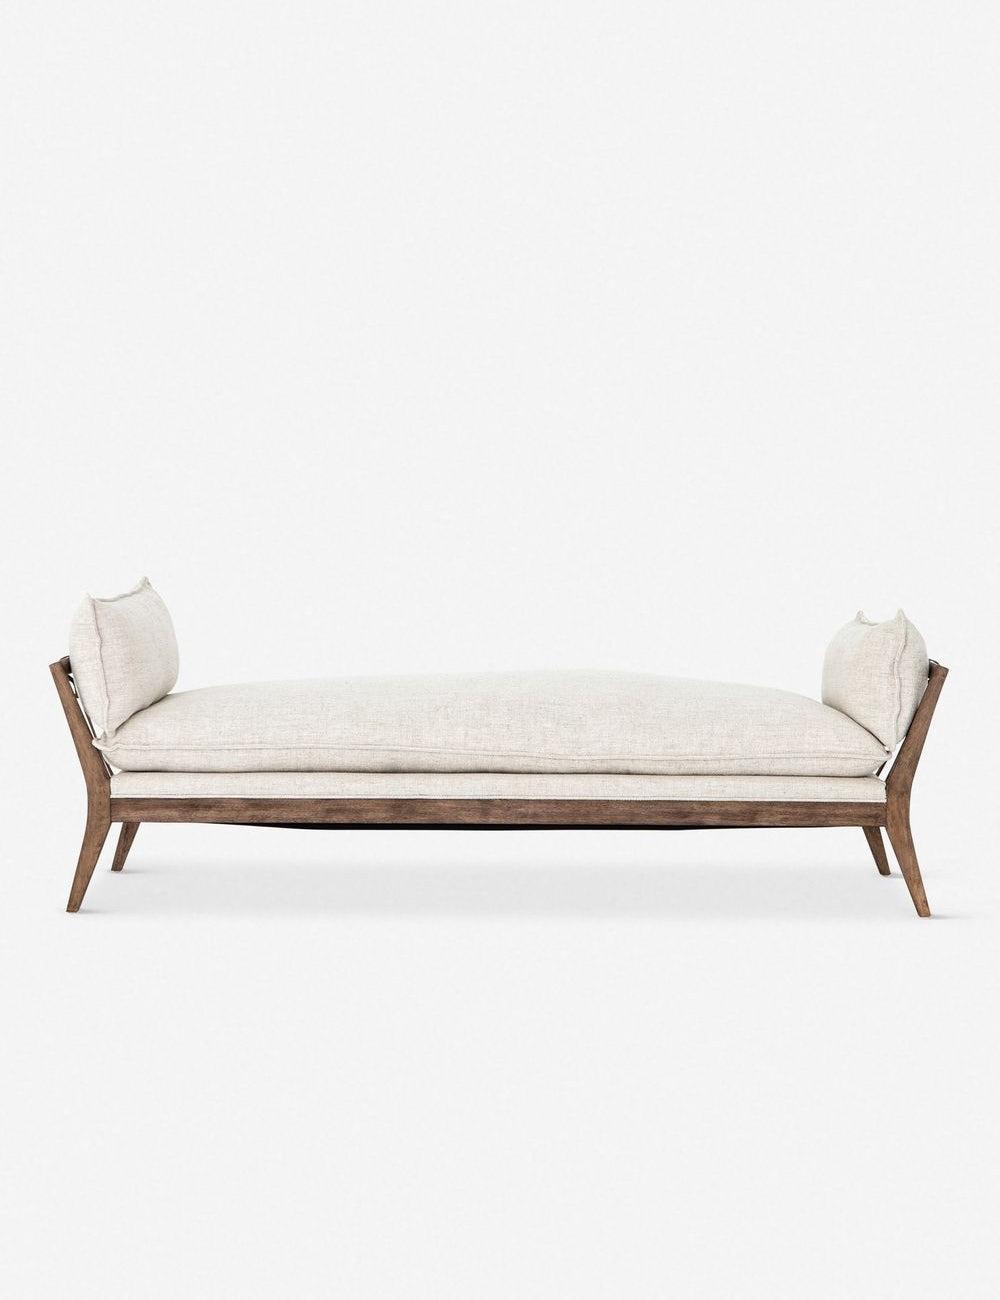 Seriphe Modern White Leather and Wood 85'' Stationary Sofa